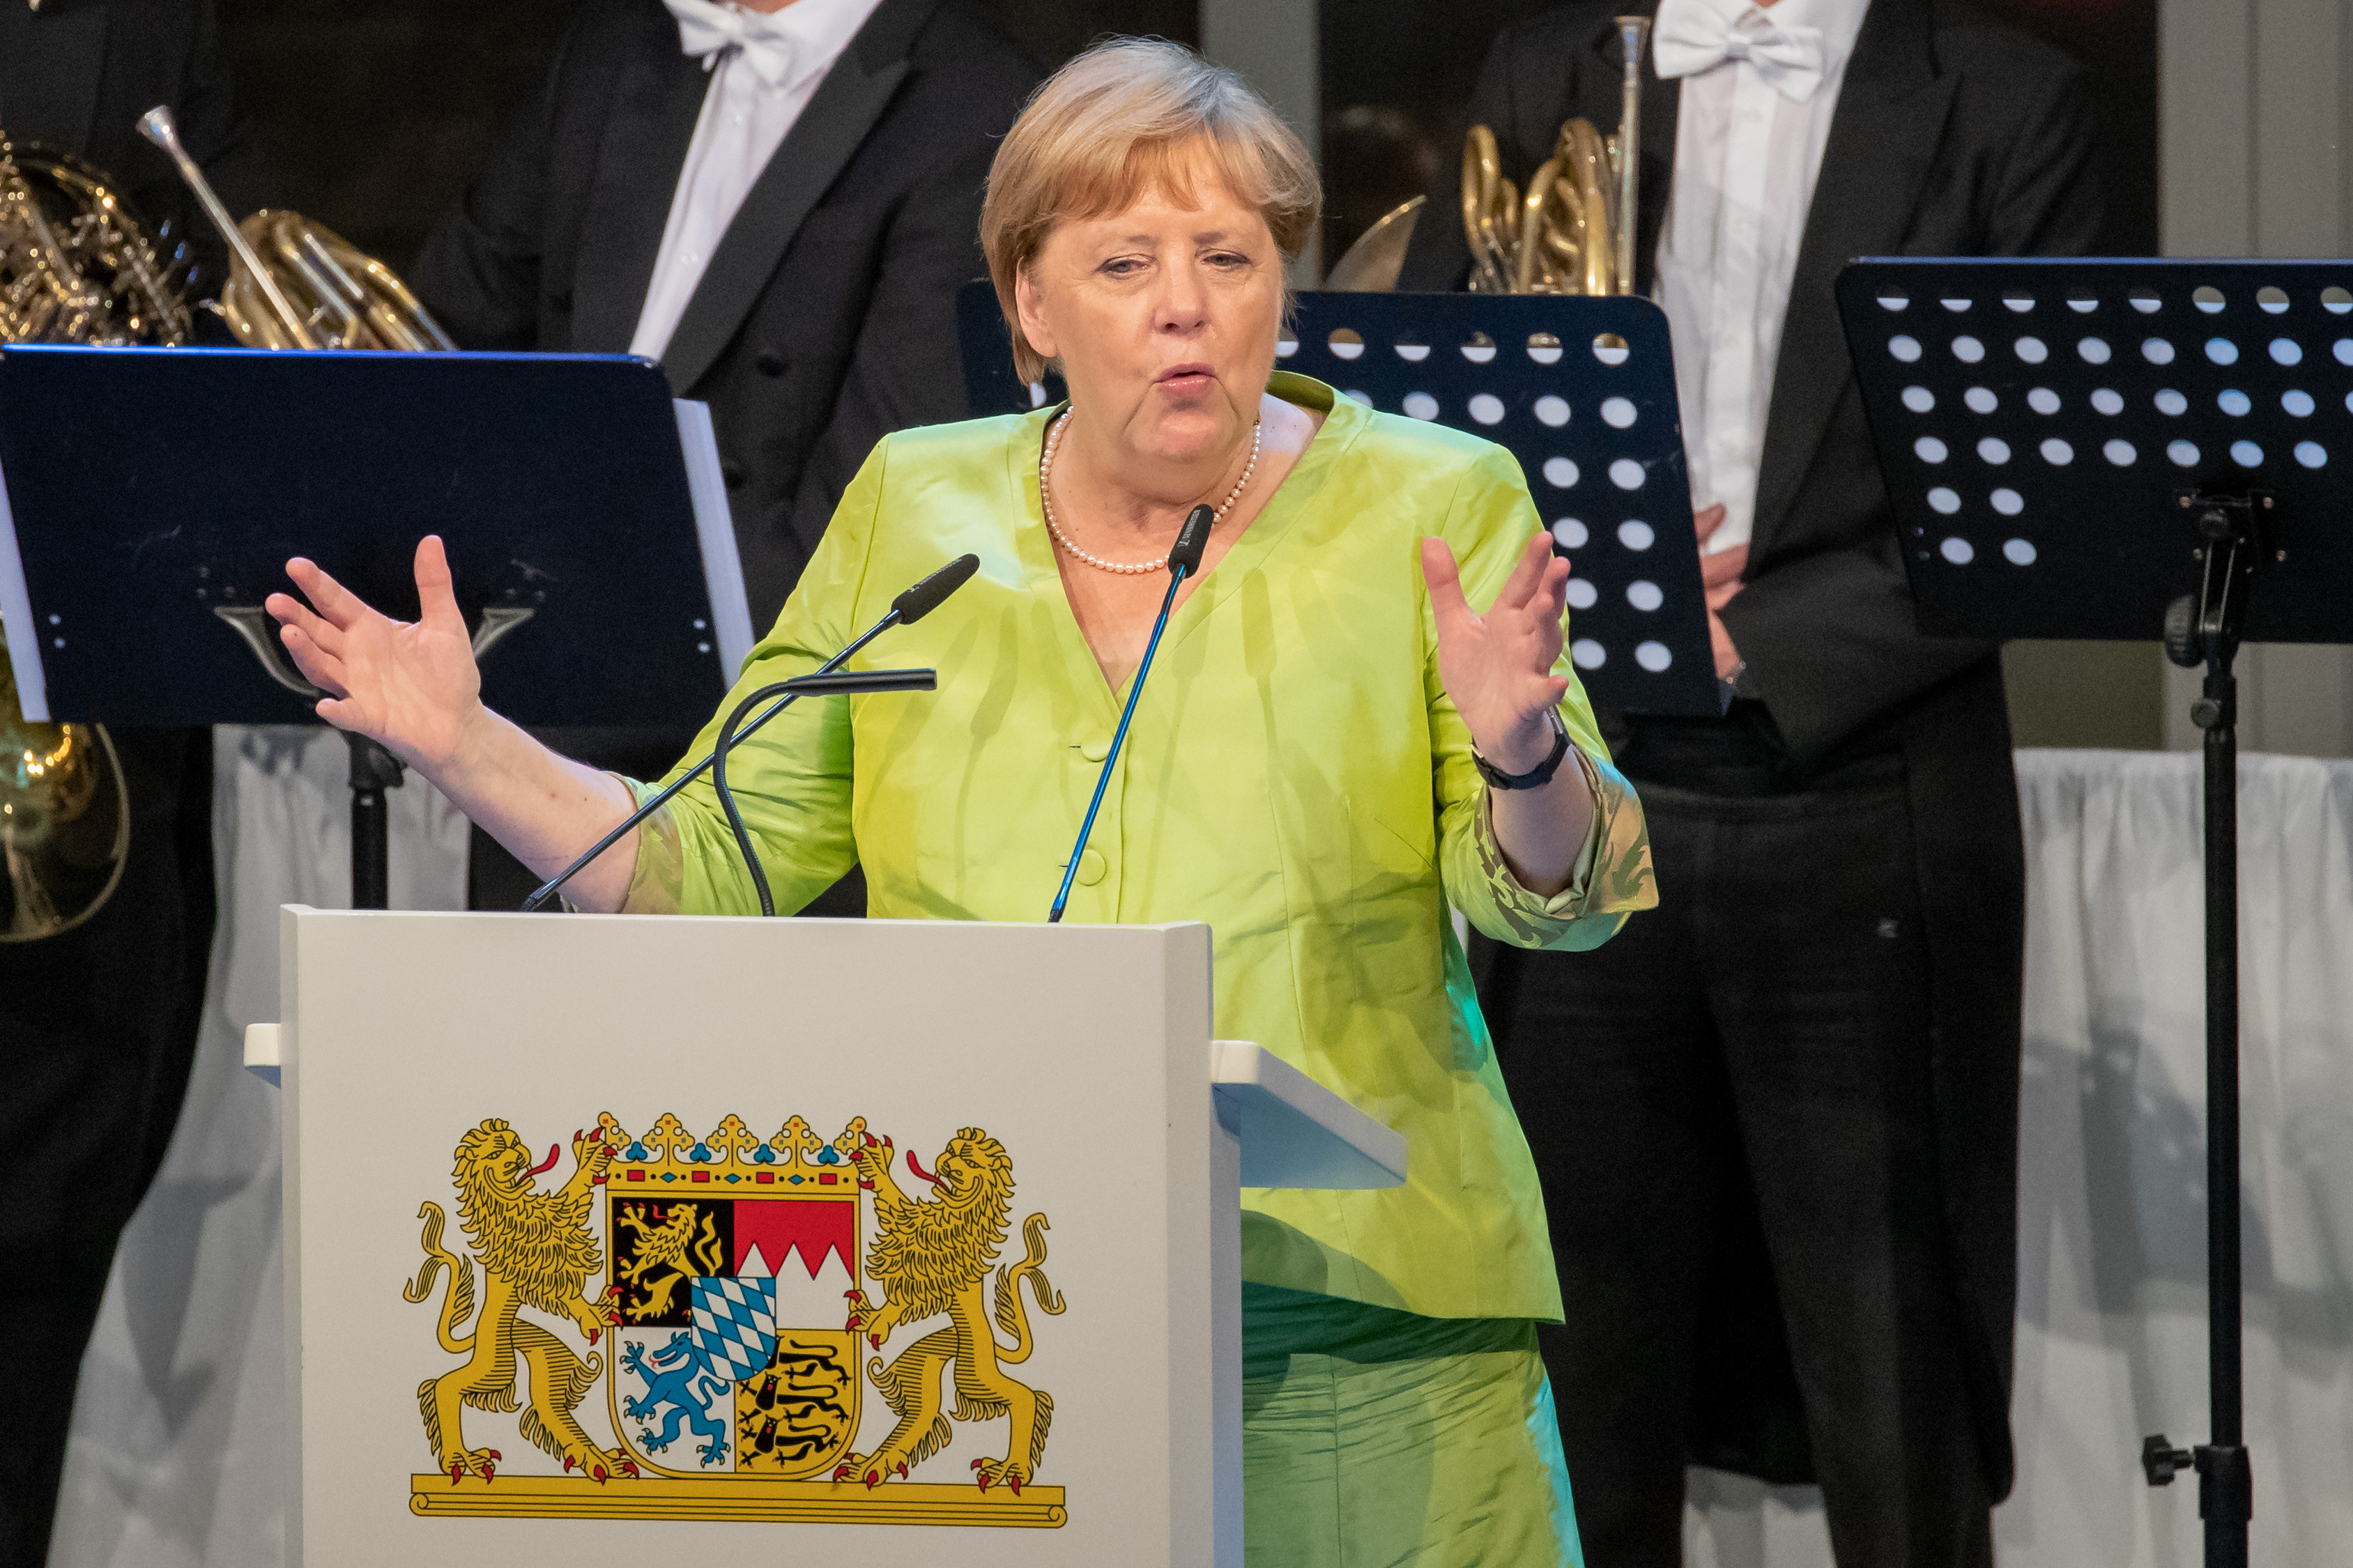 Angela Merkel gives speech to open Bayreuth festival 2019